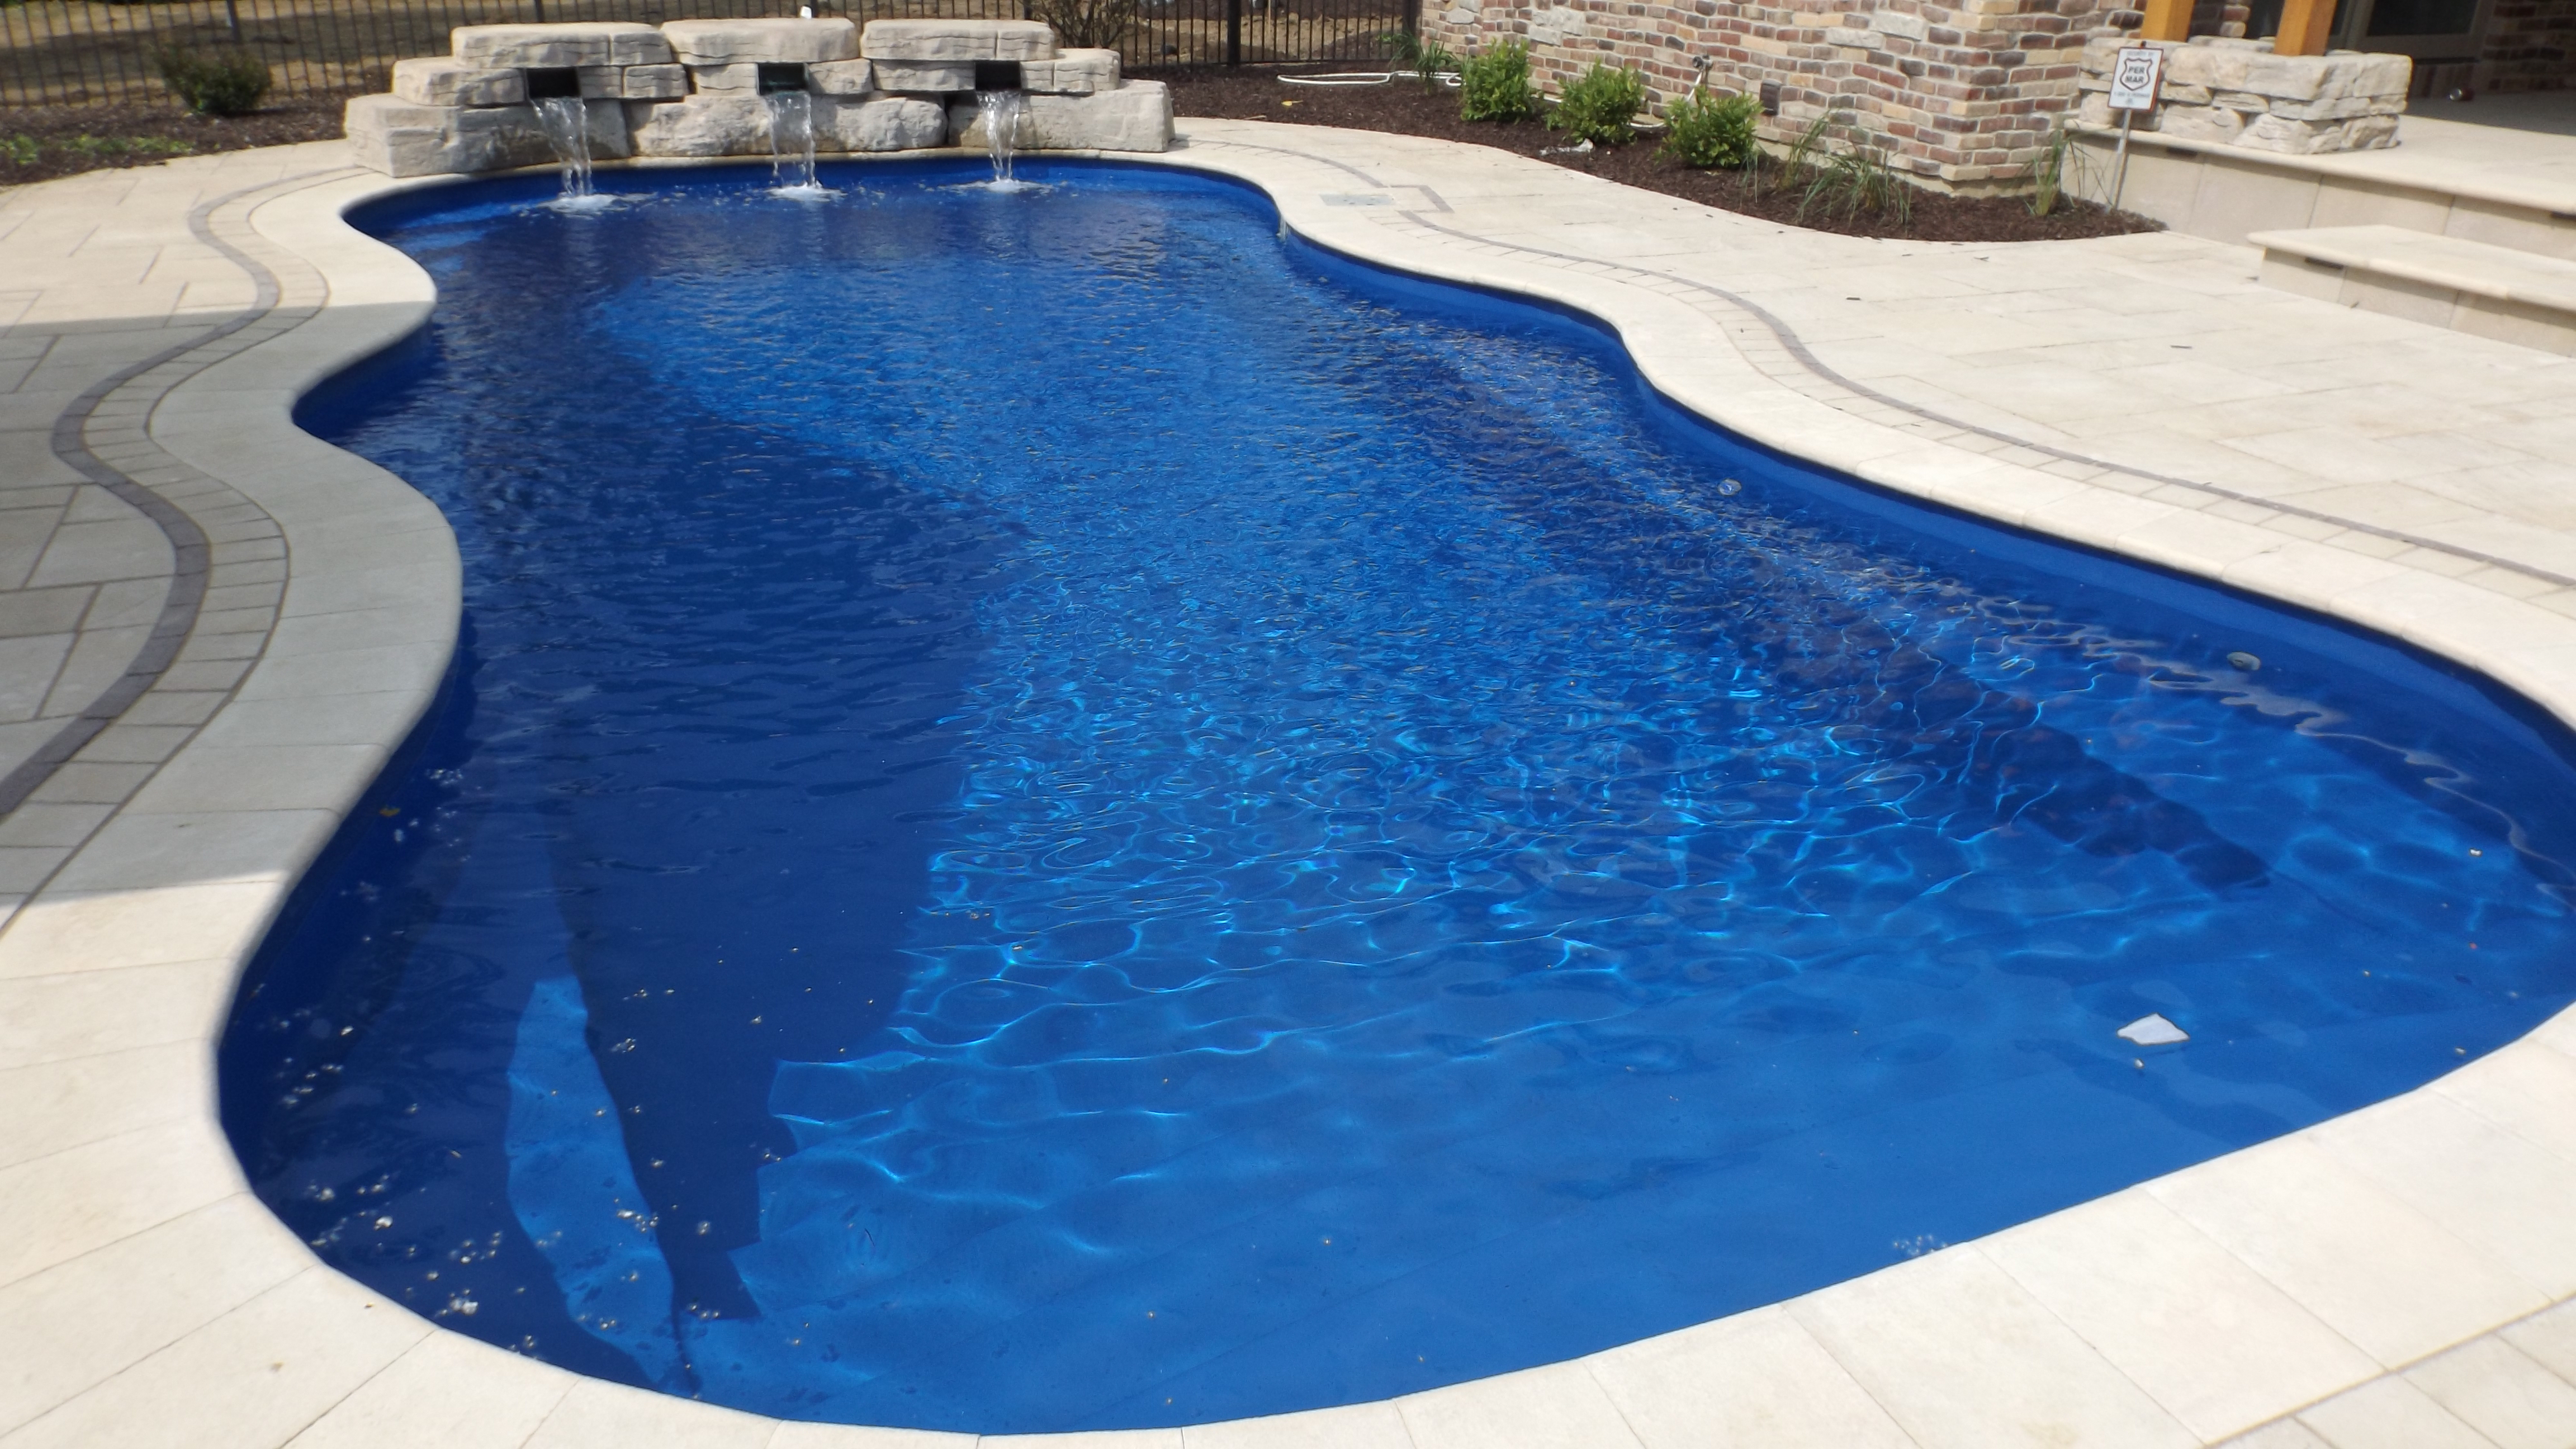 Ithaca pool design